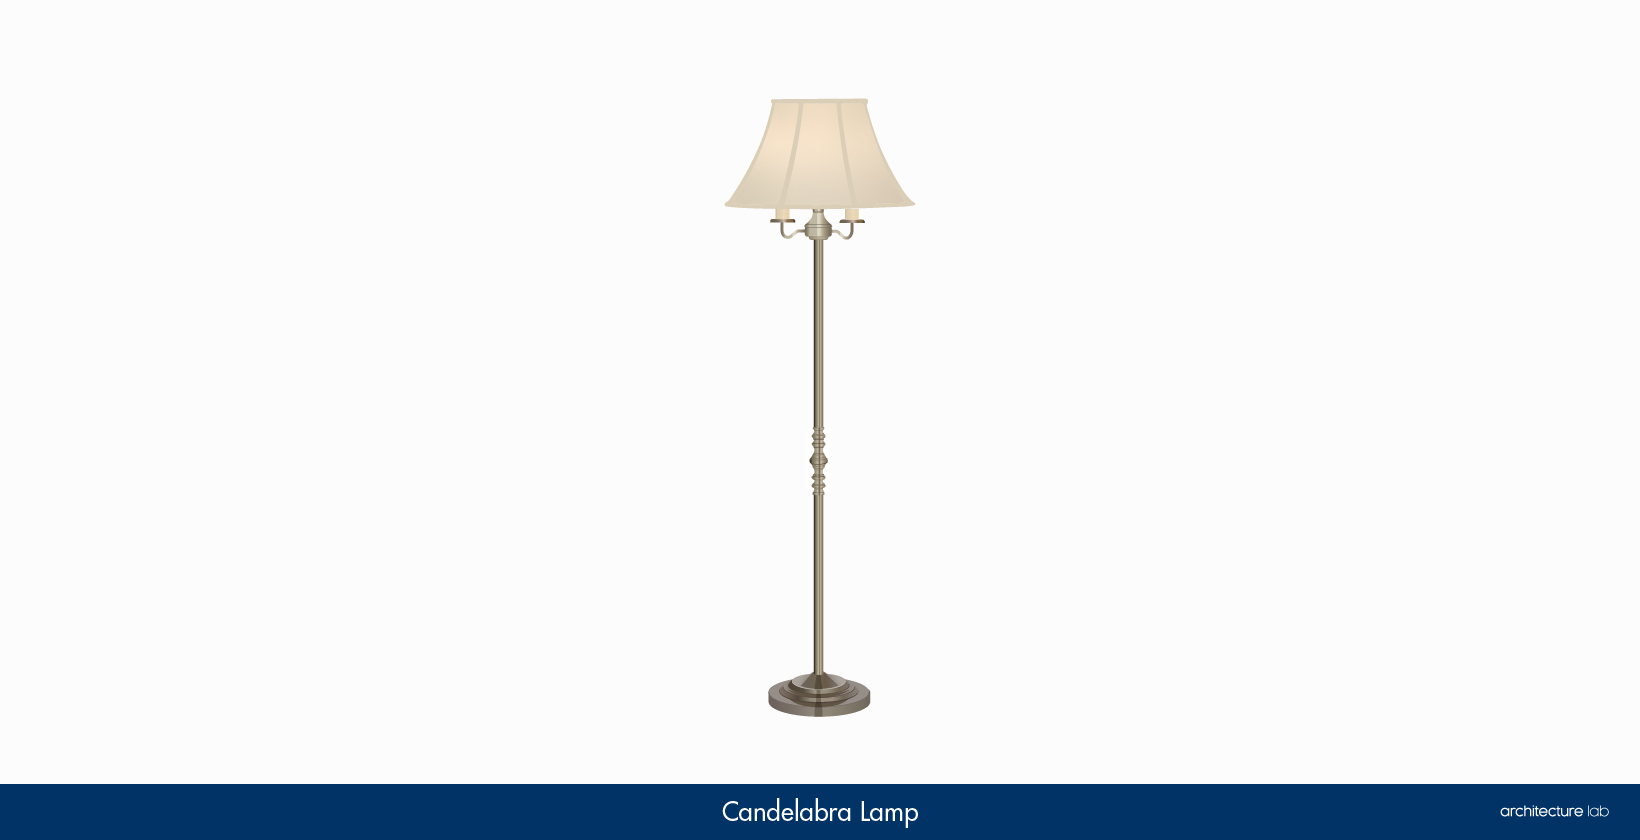 10. Candelabra lamp